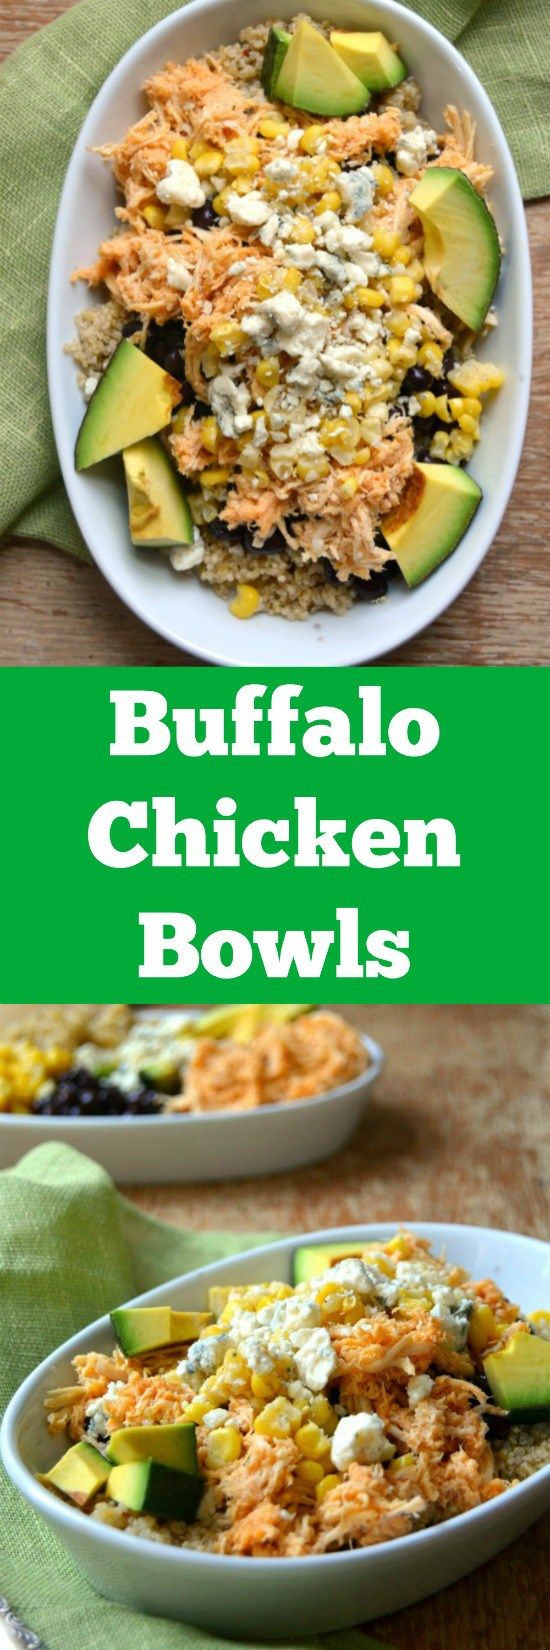 Healthy Buffalo Chicken Recipes
 Best 25 Healthy Buffalo Chicken ideas on Pinterest